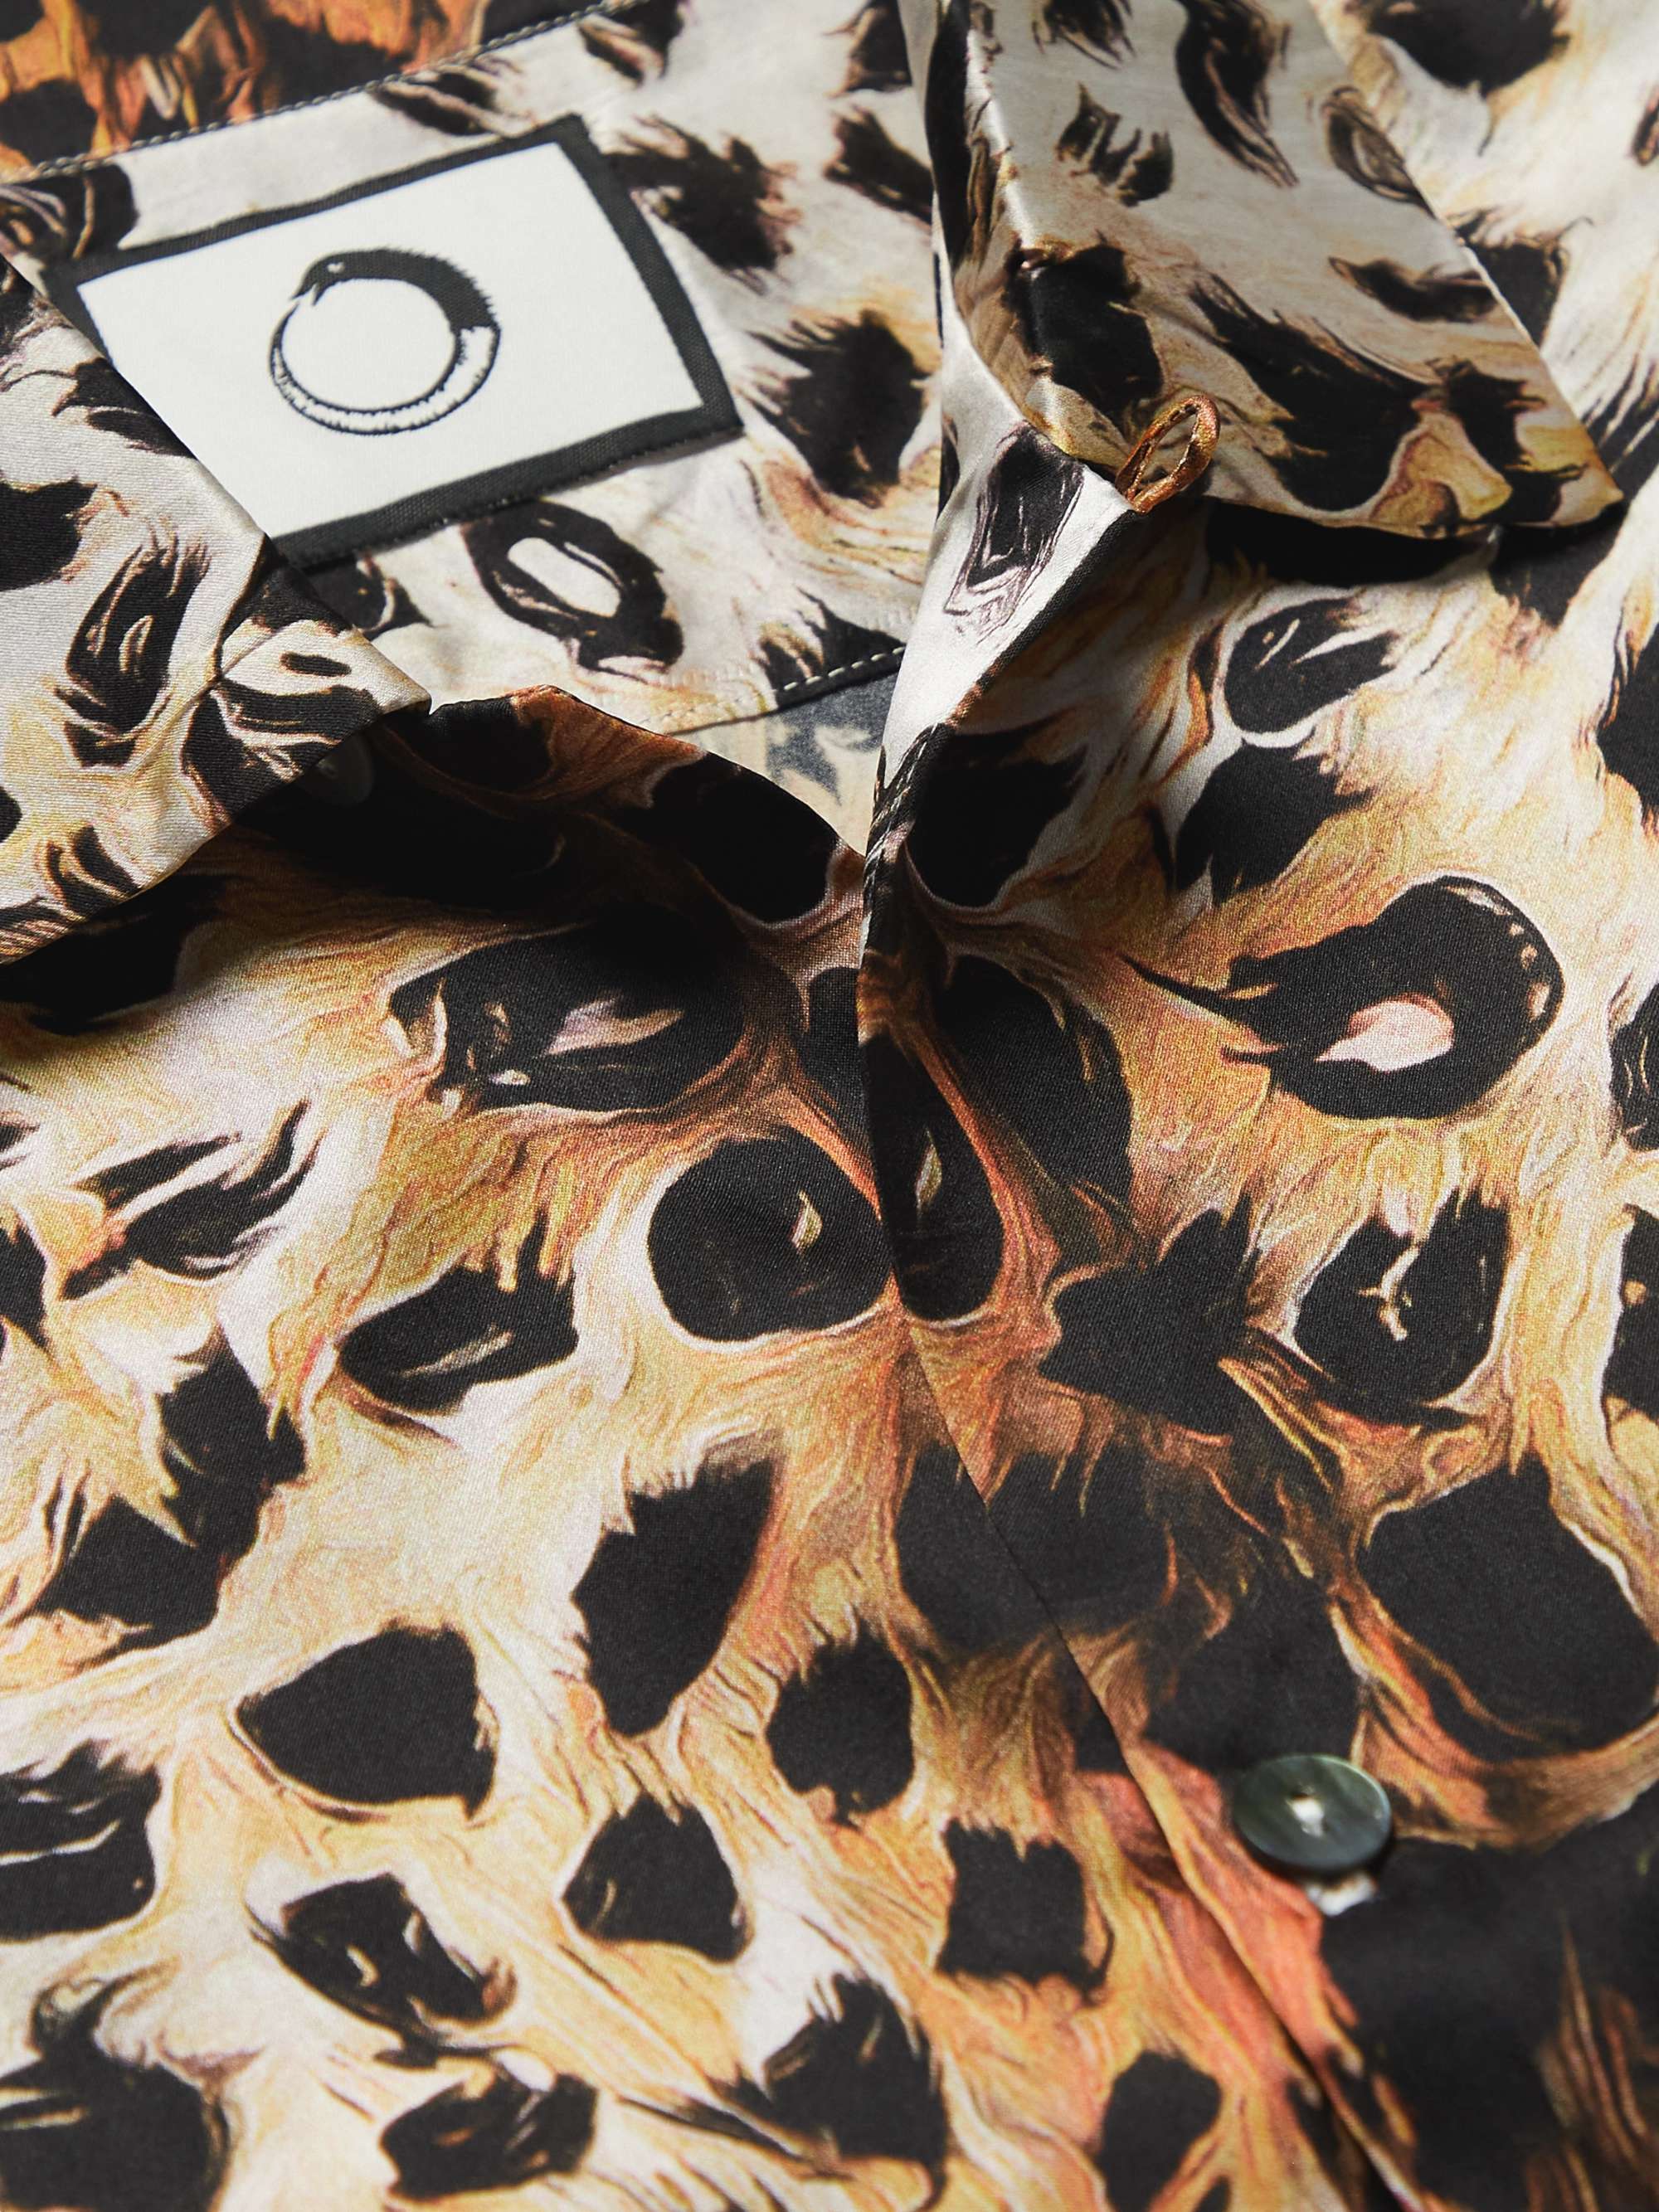 ENDLESS JOY Convertible-Collar Leopard-Print Silk-Satin Shirt